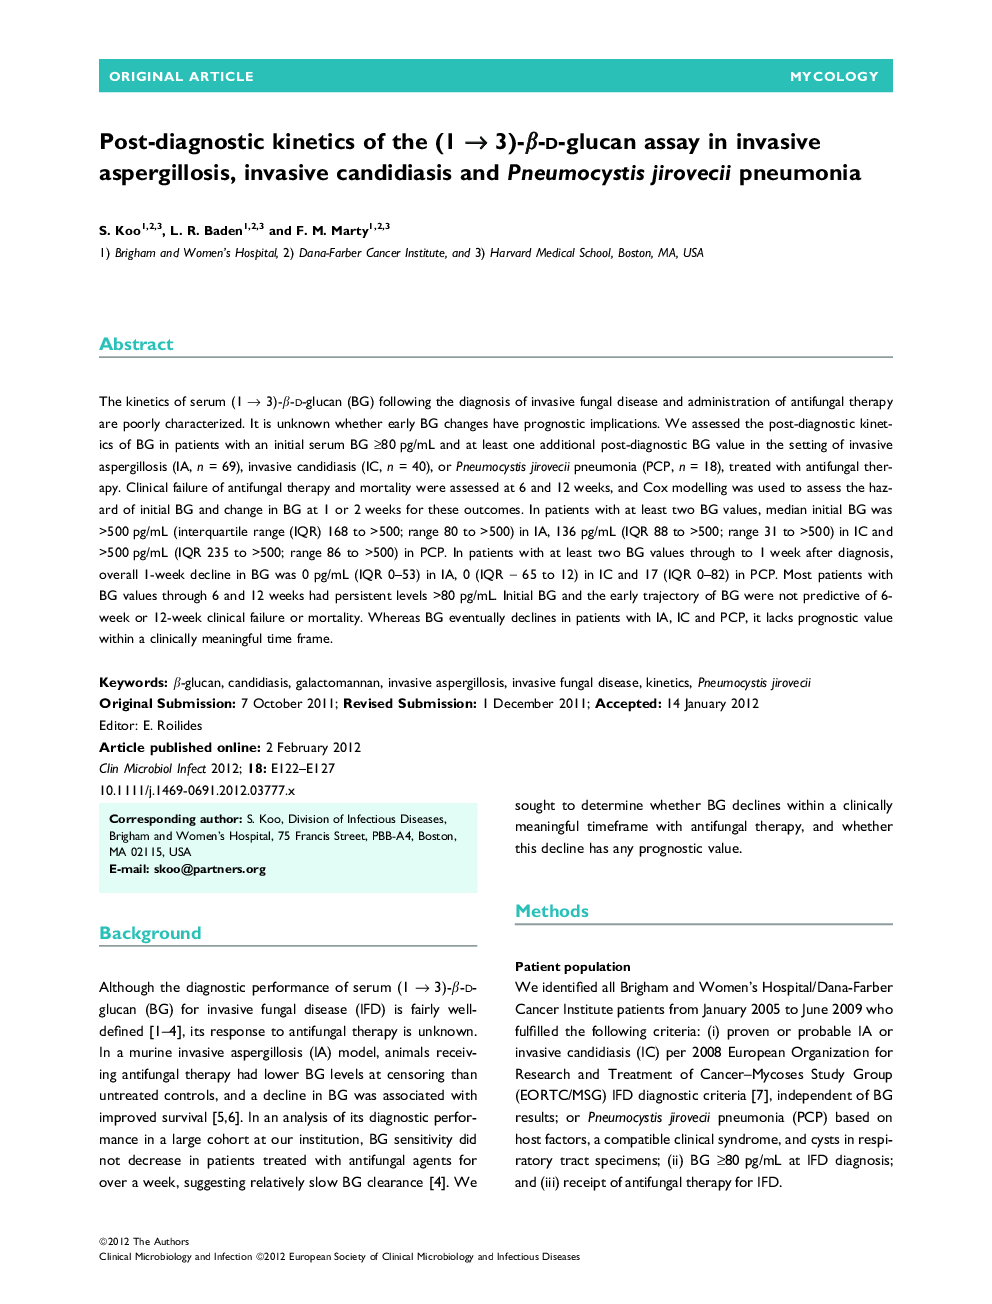 Post-diagnostic kinetics of the (1 → 3)-β-d-glucan assay in invasive aspergillosis, invasive candidiasis and Pneumocystis jirovecii pneumonia 